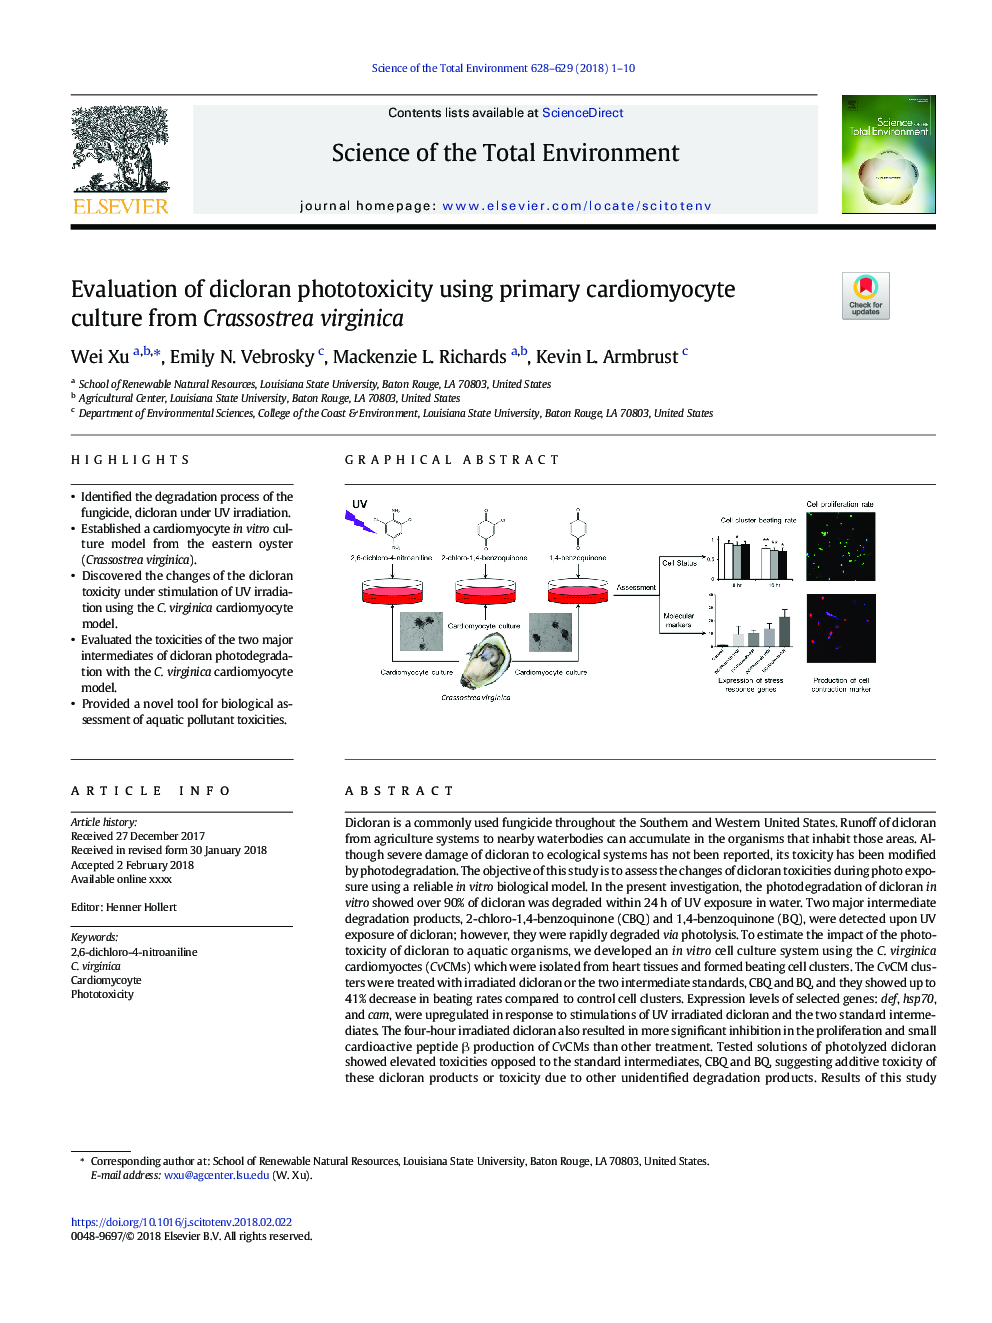 Evaluation of dicloran phototoxicity using primary cardiomyocyte culture from Crassostrea virginica